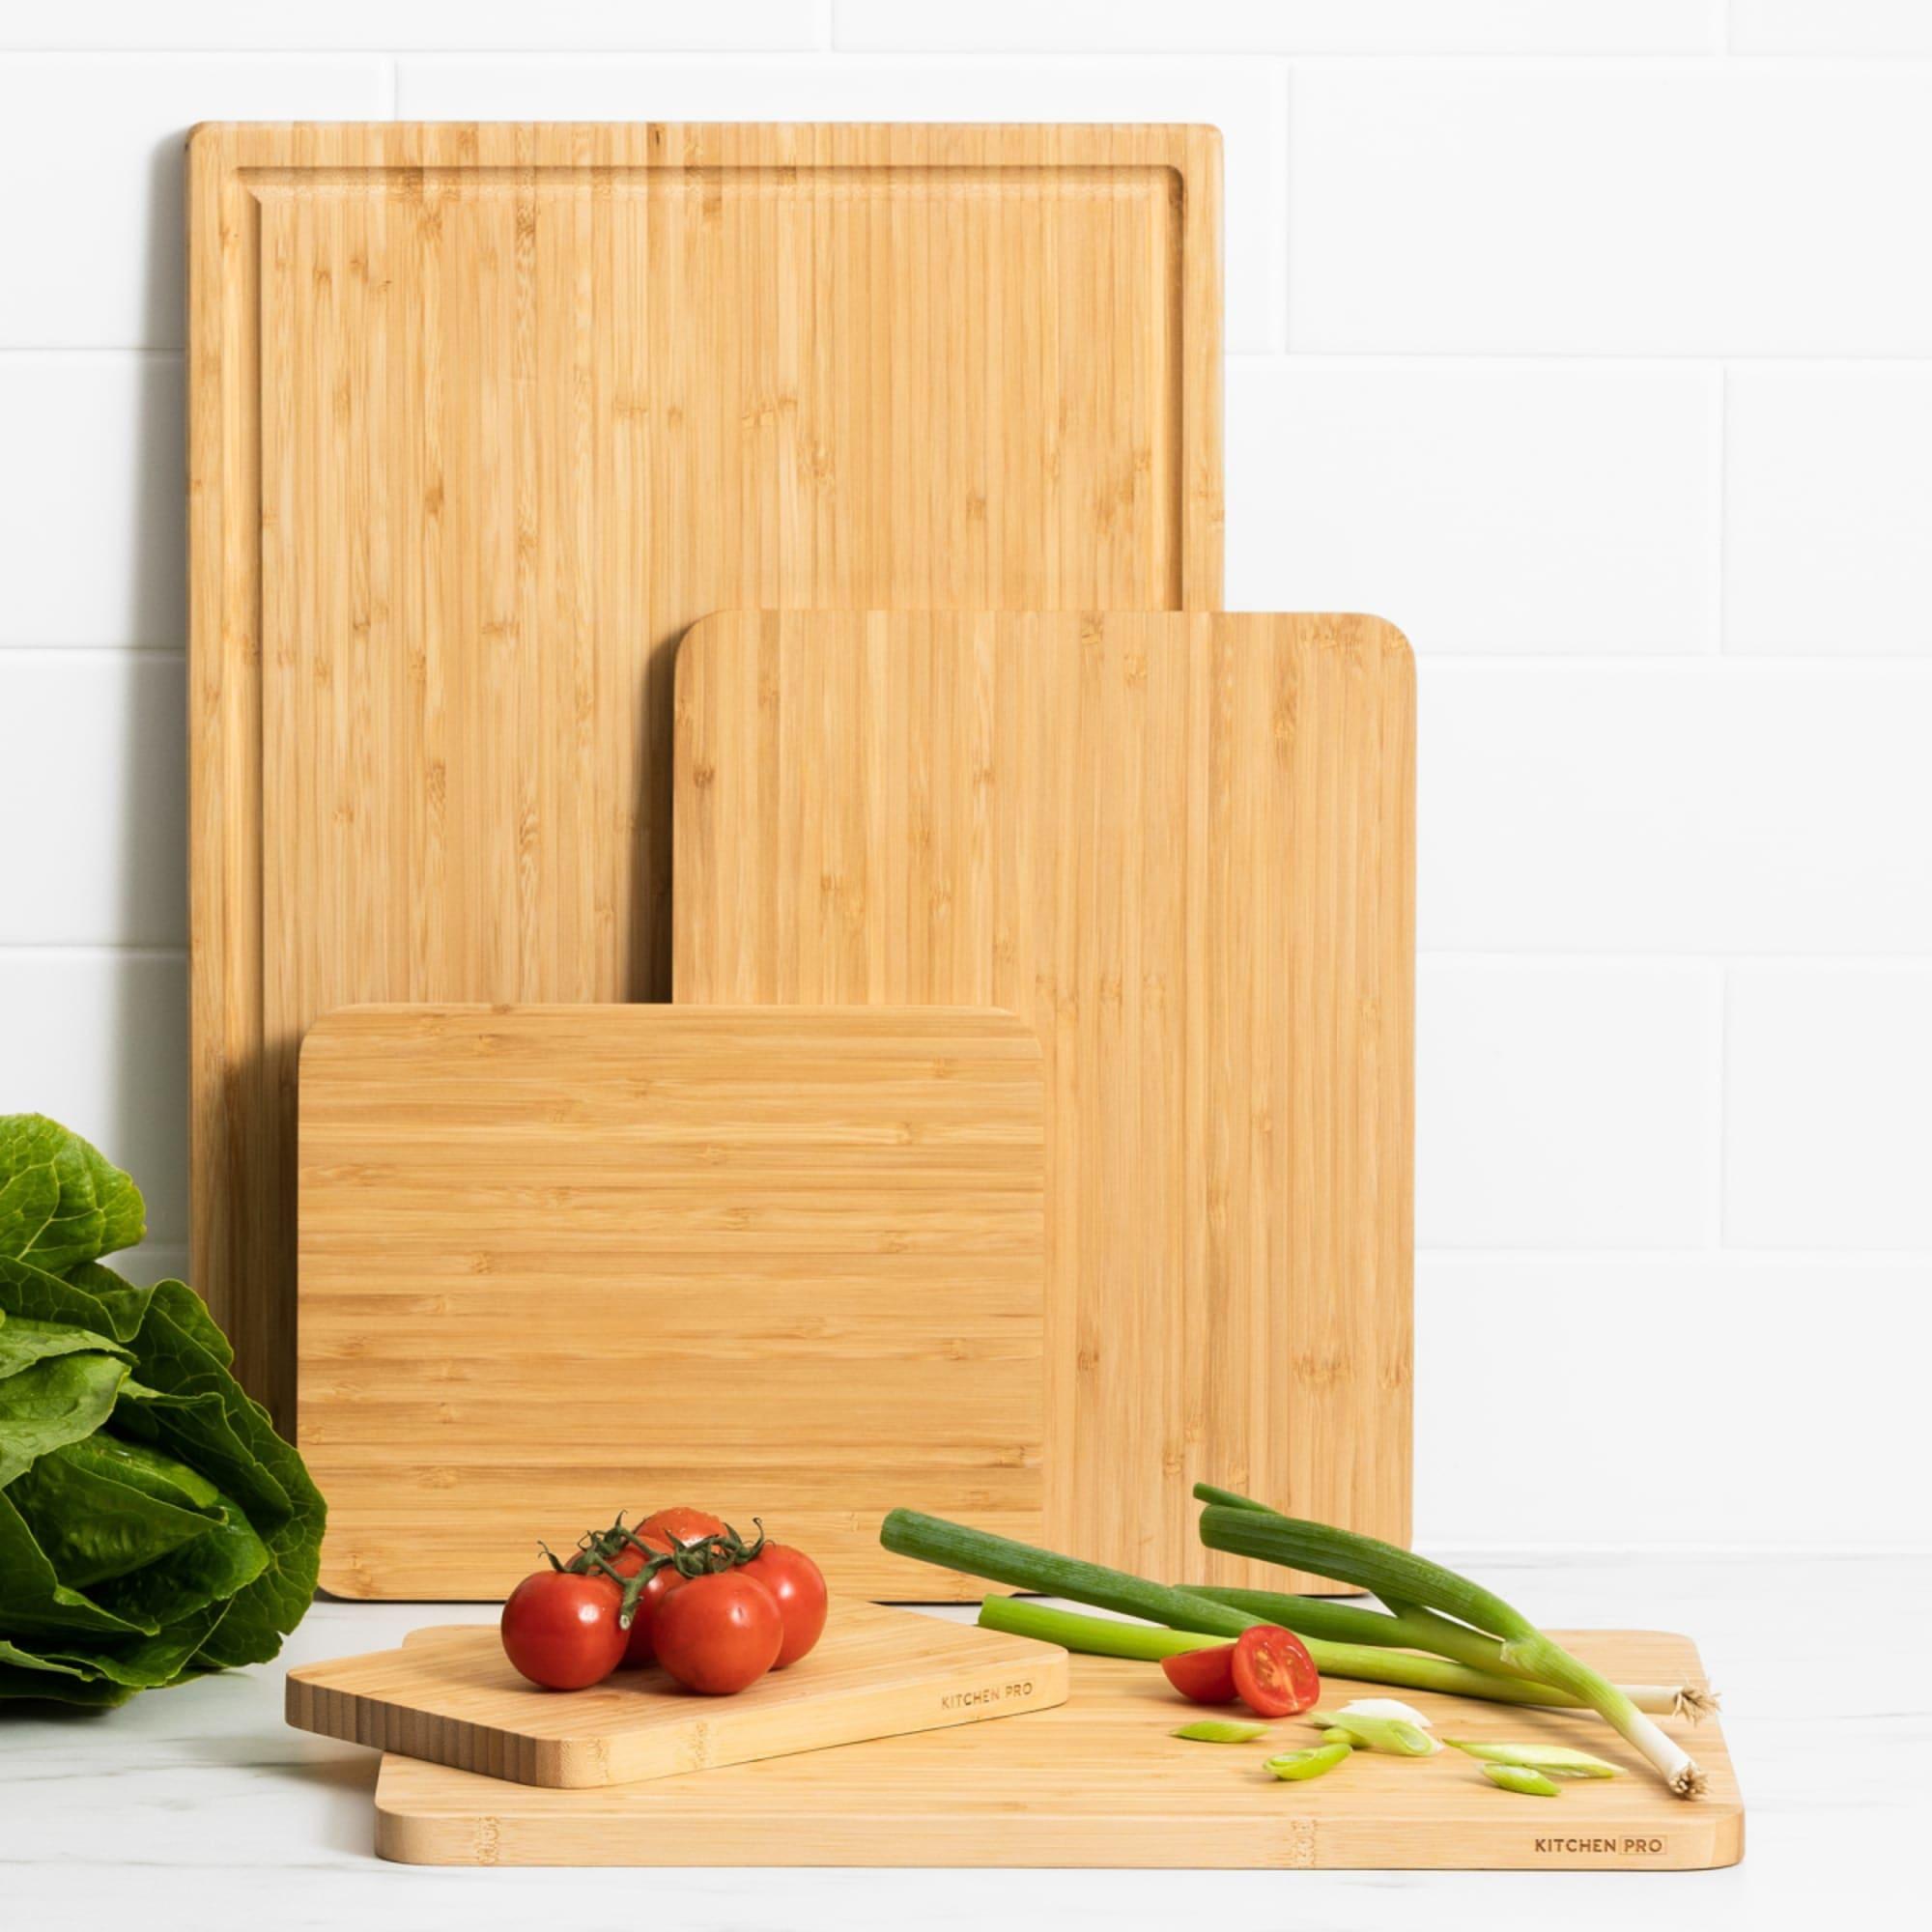 Kitchen Pro Eco Bamboo Cutting Board 22x15cm Image 4